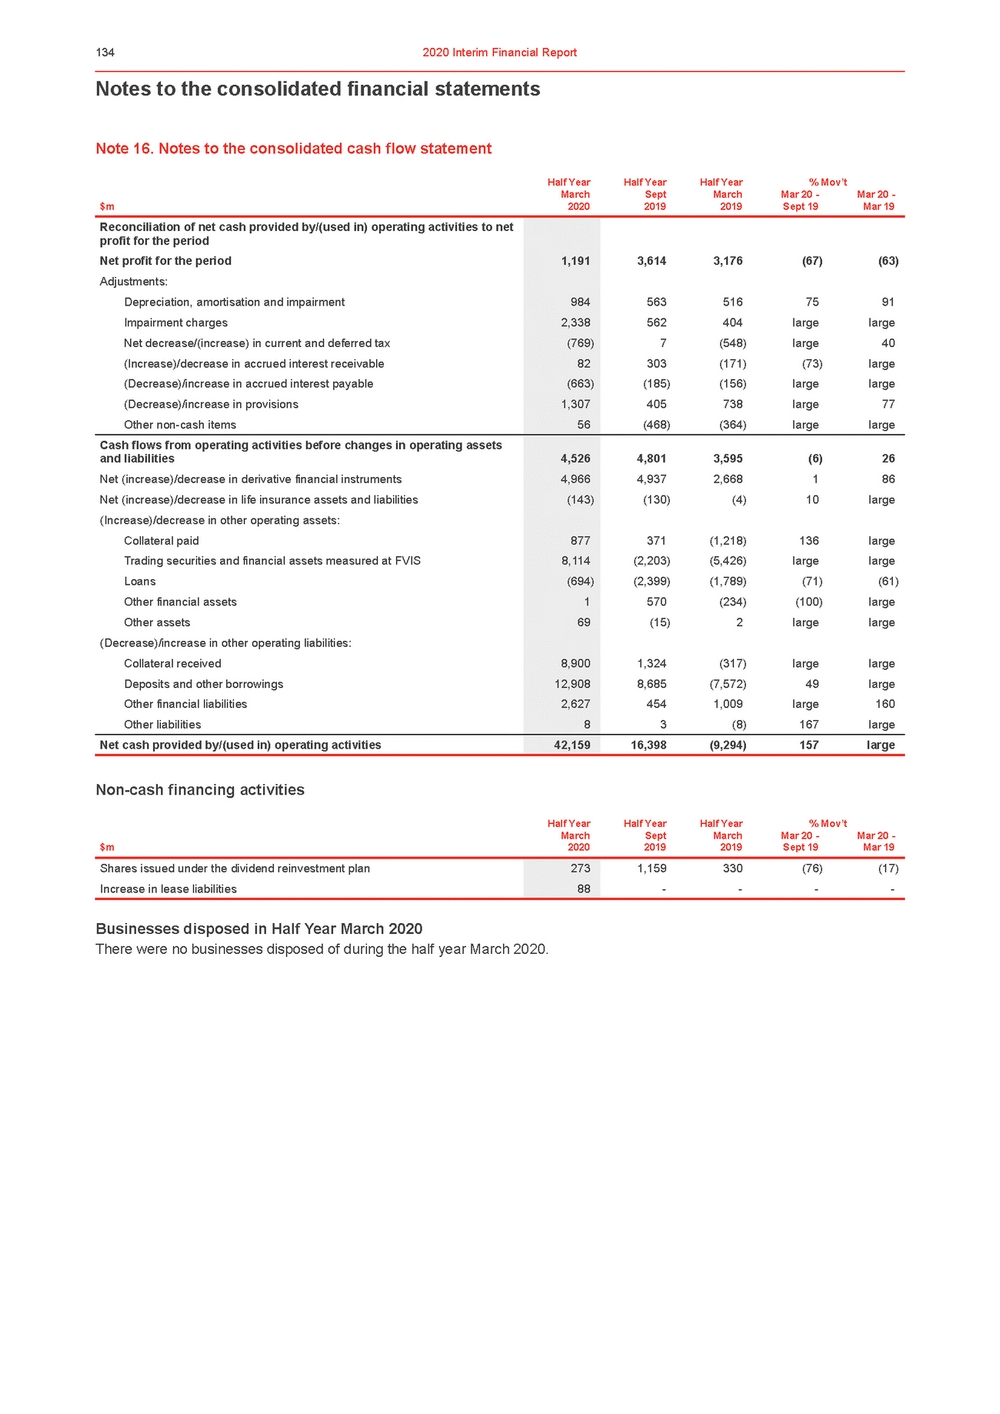 11676-3-ex1_westpac 2020 interim financial results announcement_page_139.jpg